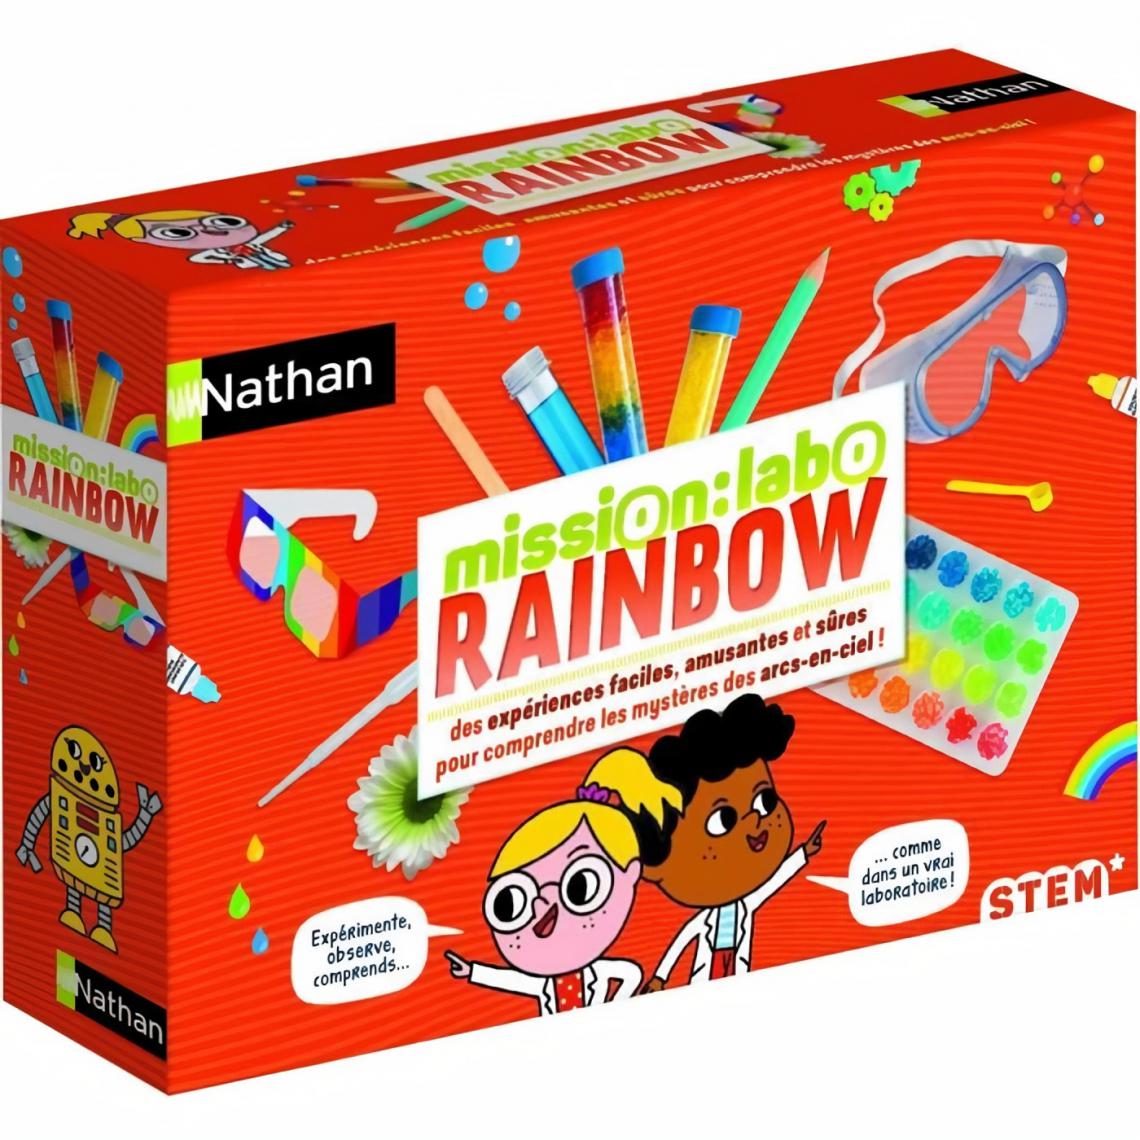 Nathan - Nathan Mission labo Rainbow coffret - Les grands classiques